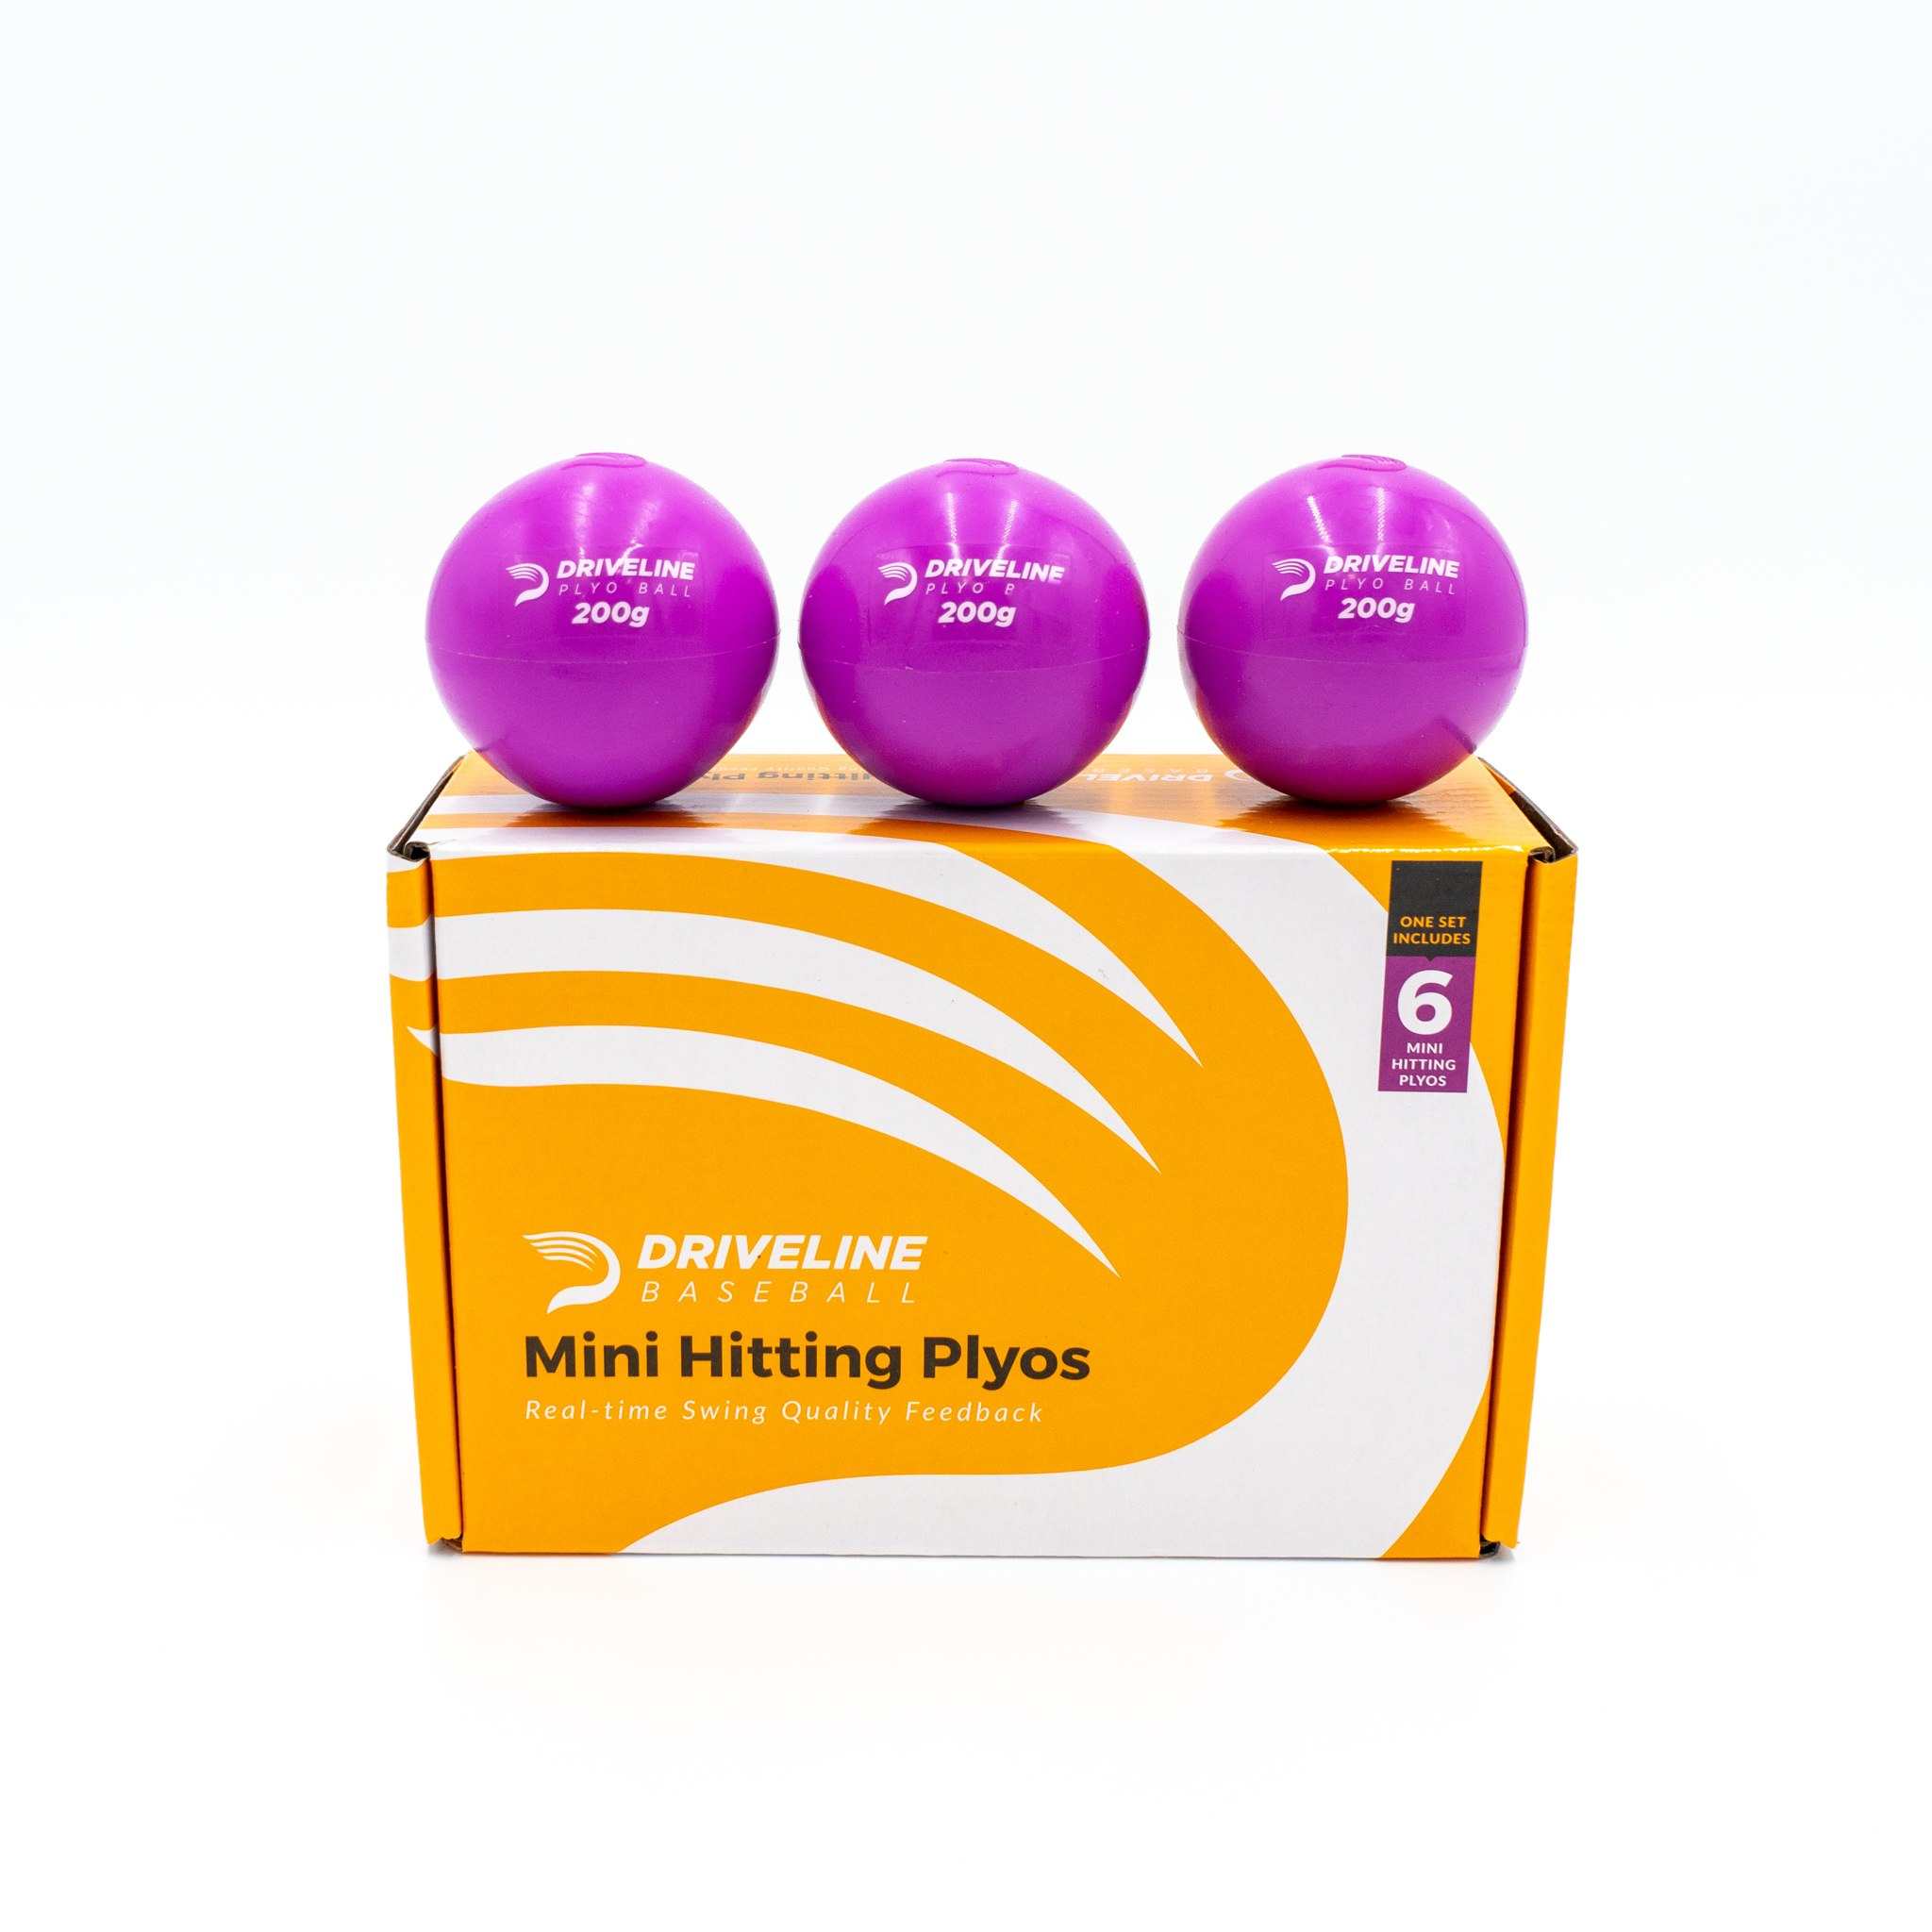 Driveline Mini Hitting Plyo Balls ®